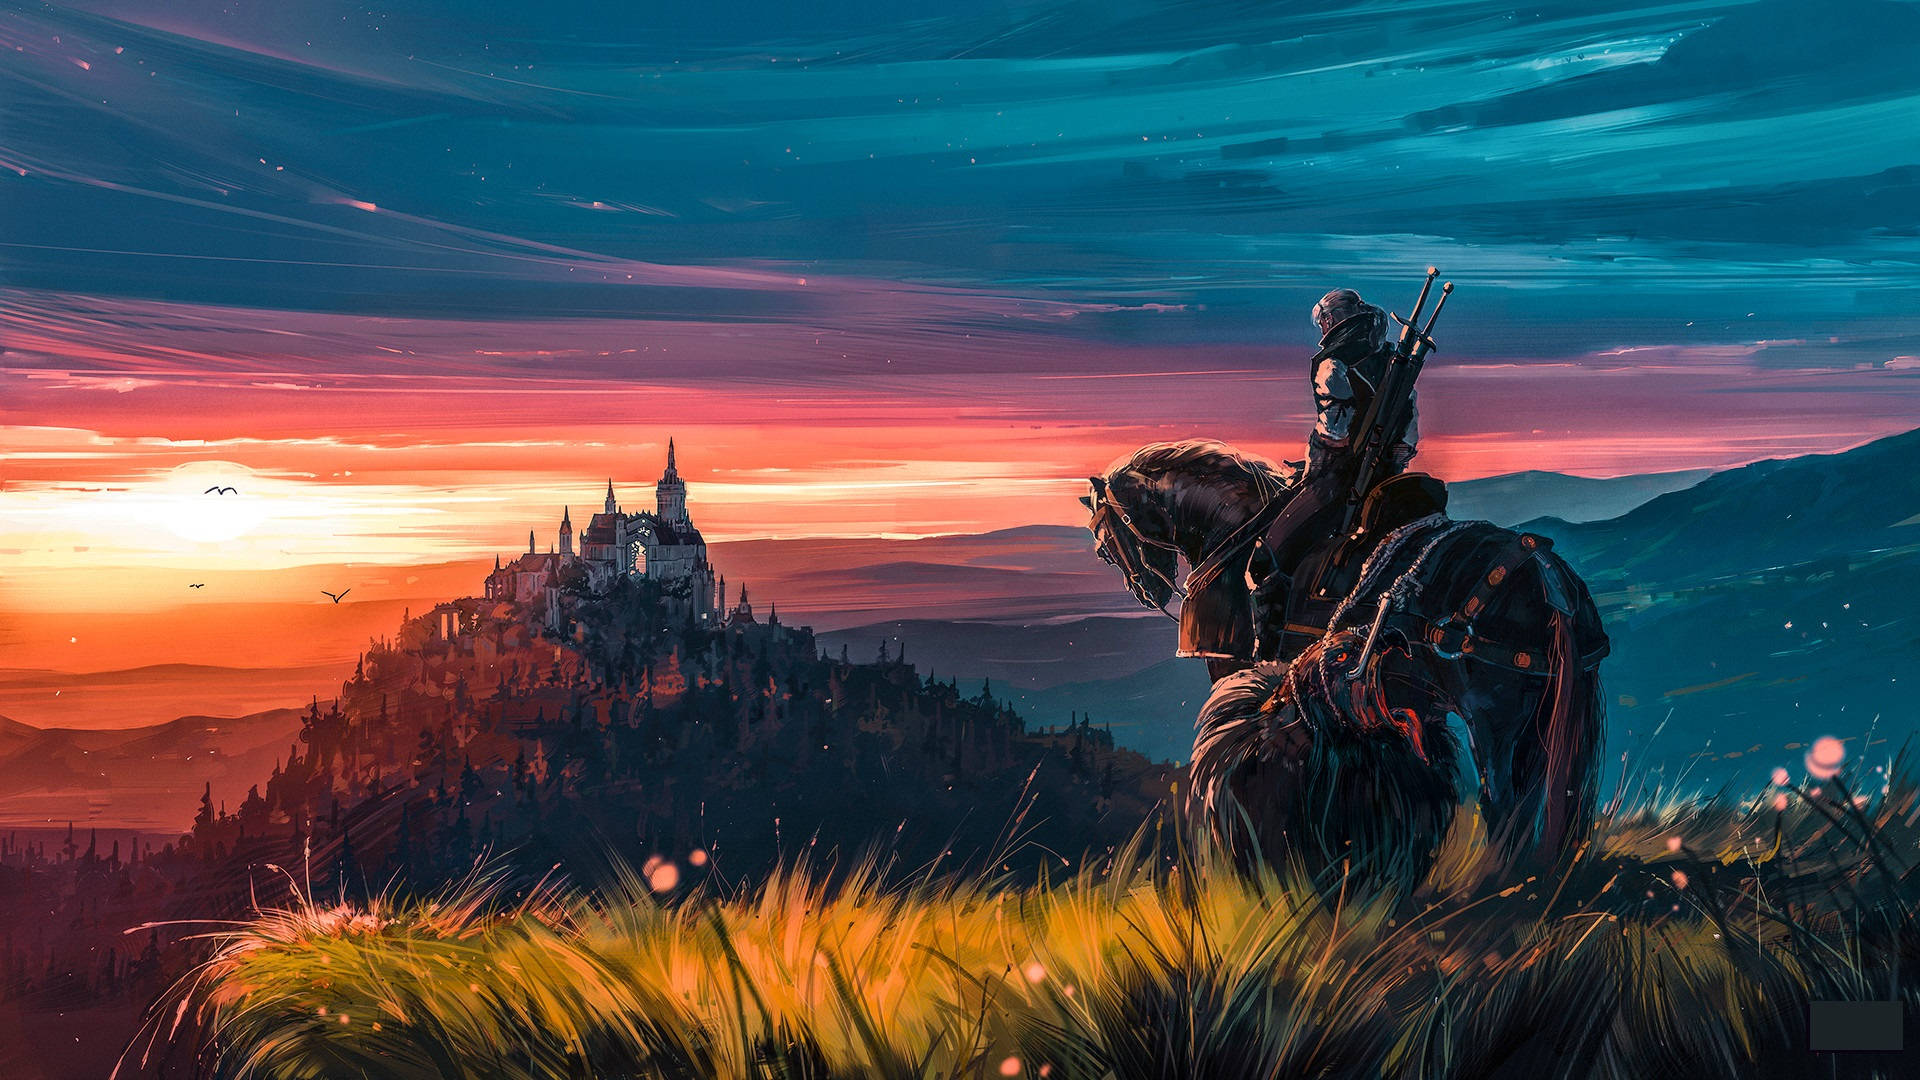 Geralt battles monsters in a pastel-colored world Wallpaper